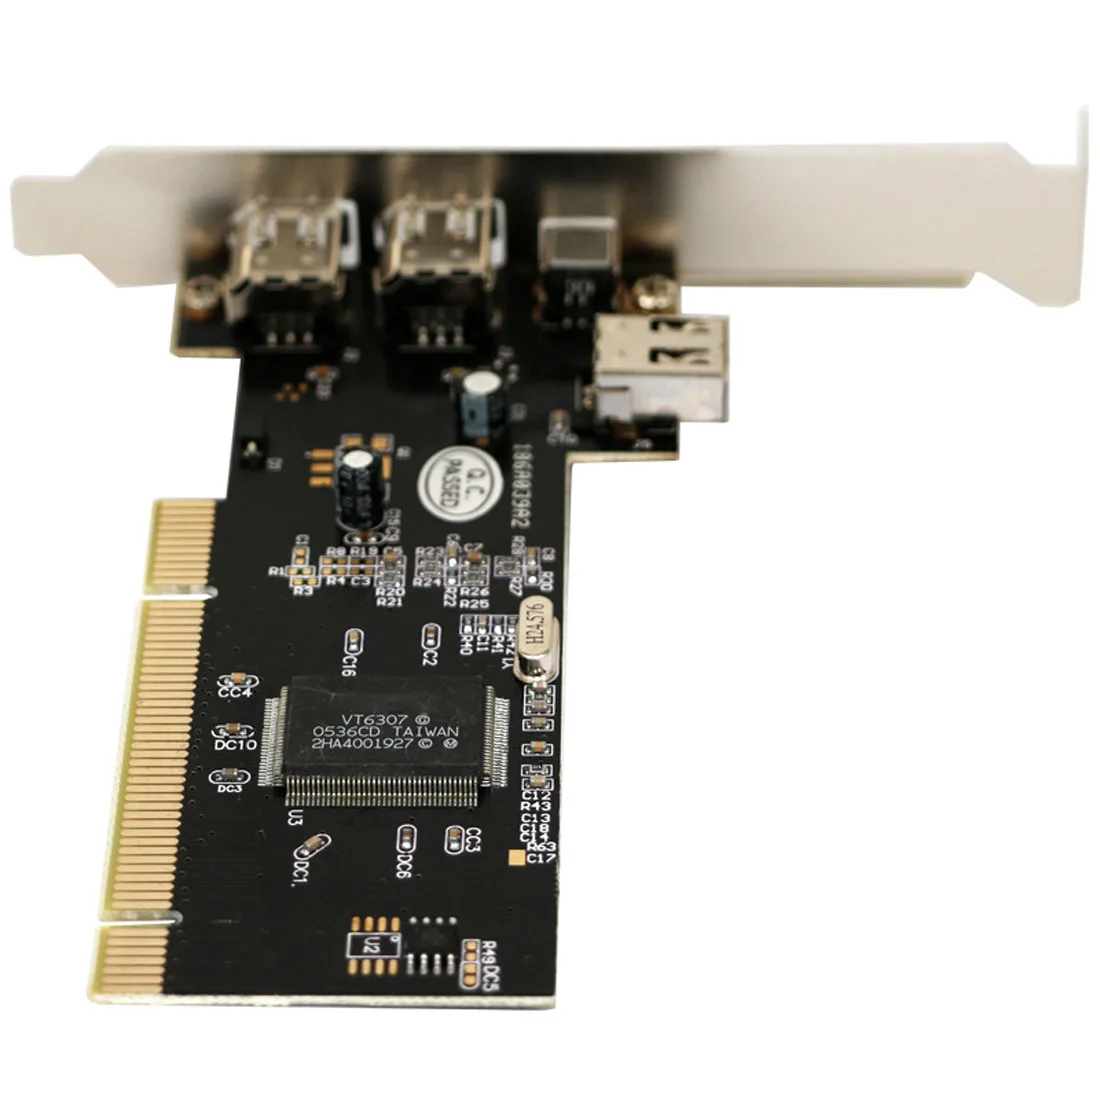 Компьютер Combo 1394A 4 порта(3+ 1) контроллер расширение карты адаптер модуль PCI 3x6 Pin 1x4 Pin w IEEE 1394 кабель для Firewire